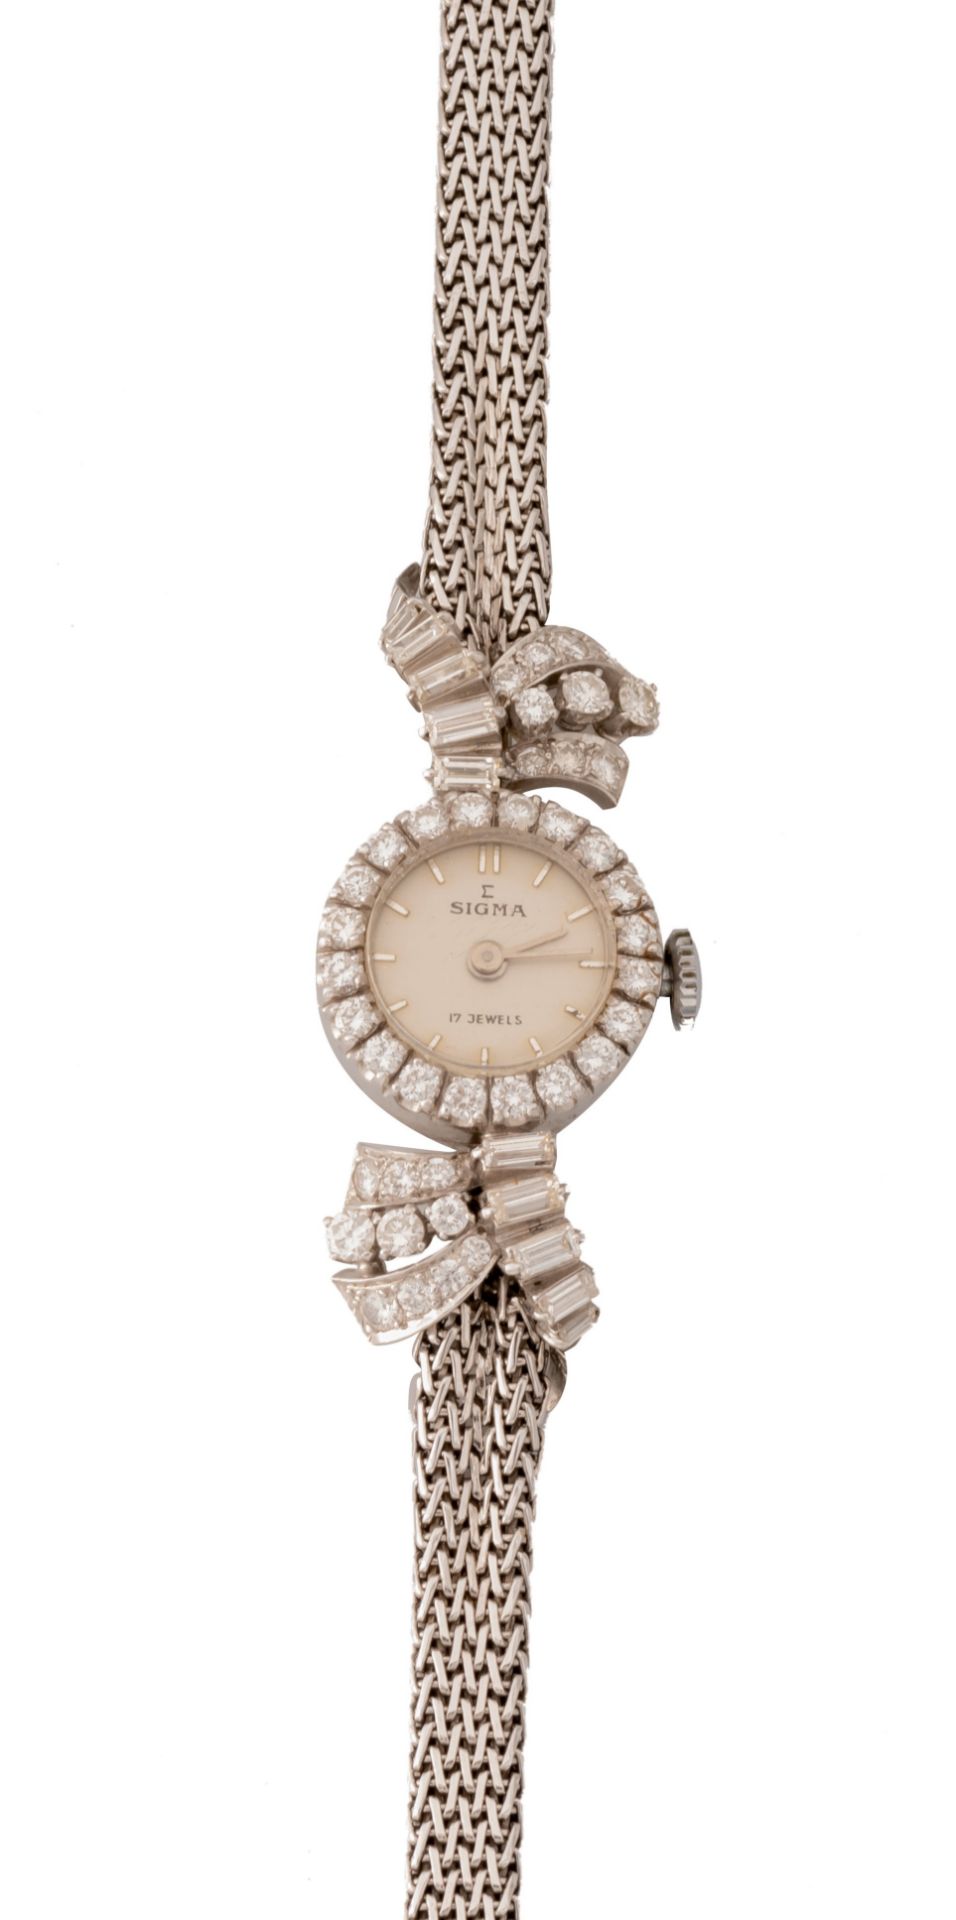 An 18ct platinum Sigma ladies' watch, set with brilliant-cut diamonds - Image 6 of 8